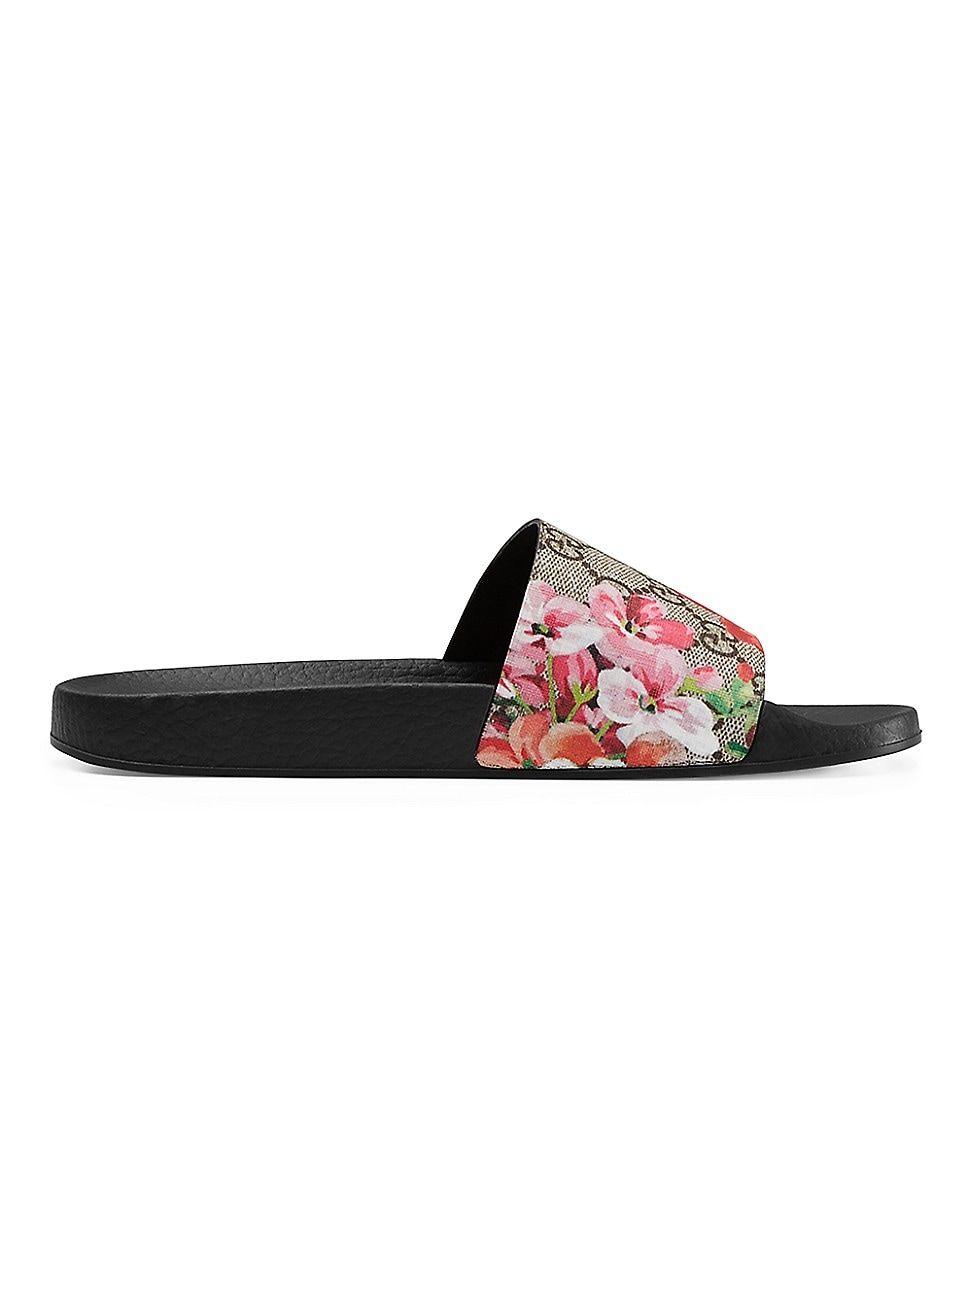 Gucci Women's GG Blooms Supreme Slide Sandals - Size 11 | Saks Fifth Avenue